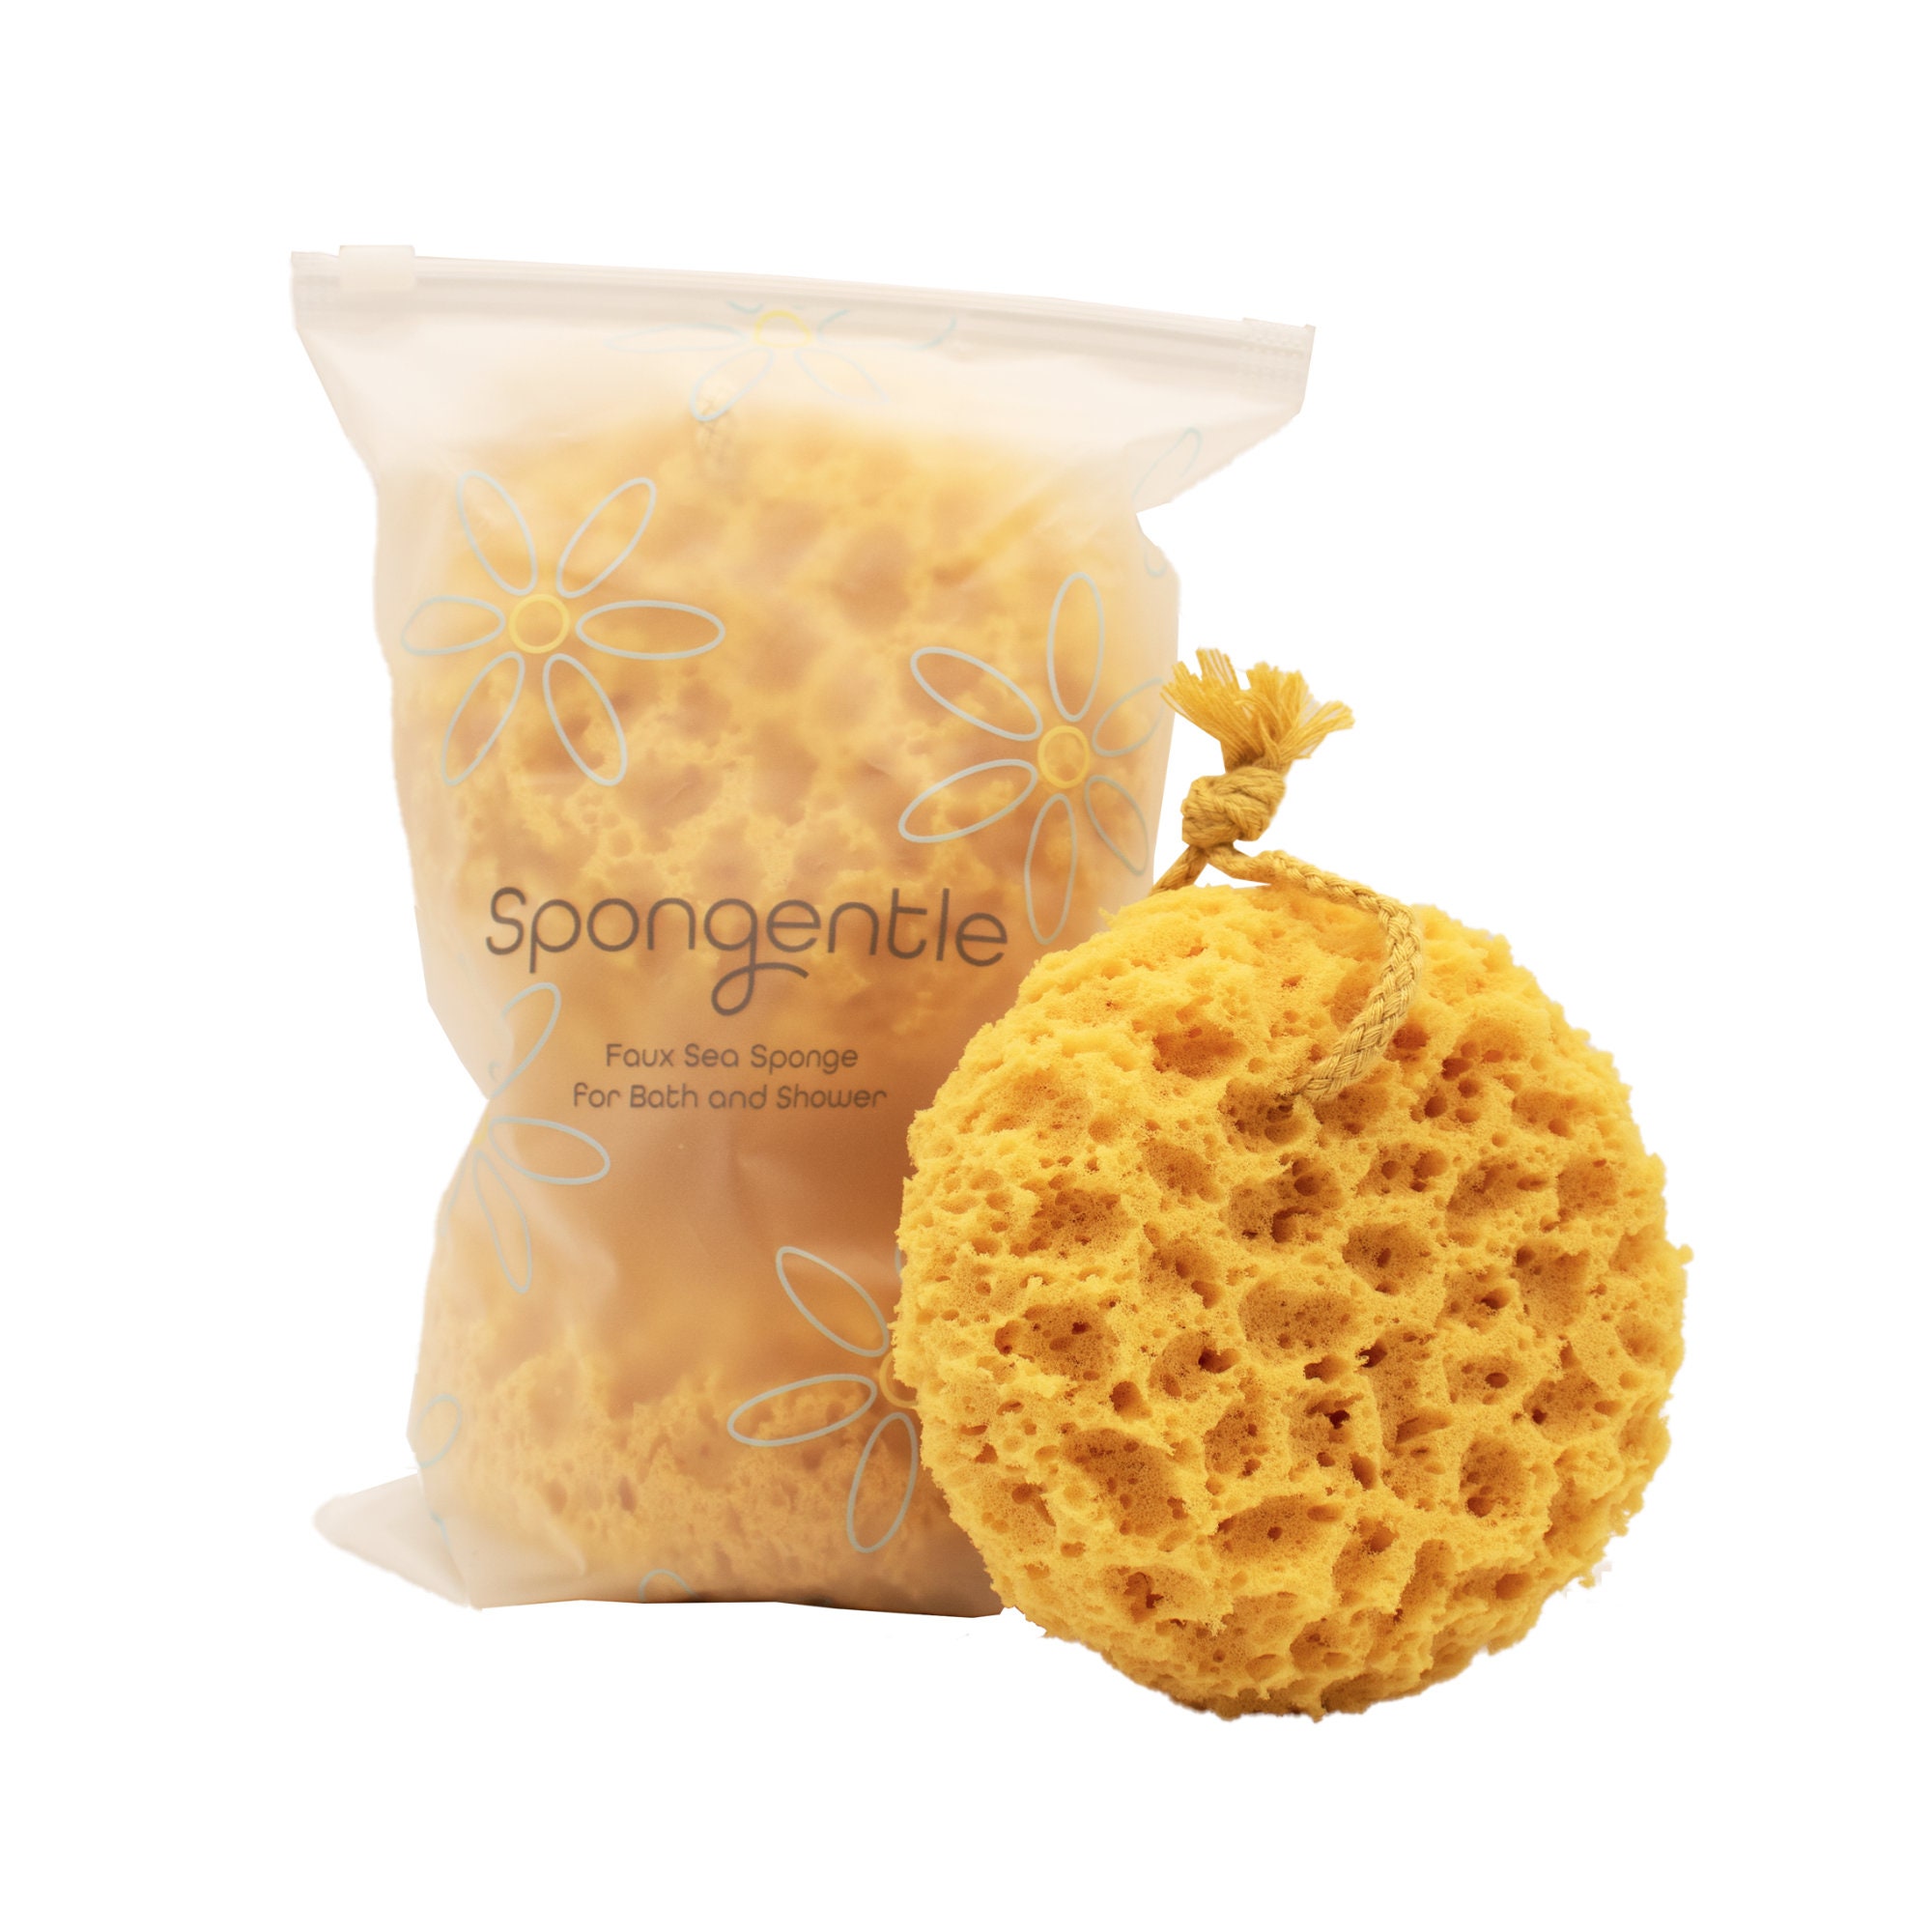 Facial Sponge - Natural Sponge - Natural Sea Sponge - Face Care - Beauty  Supply - Exfoliating Sea Sponge for Facials 2-3 1pc